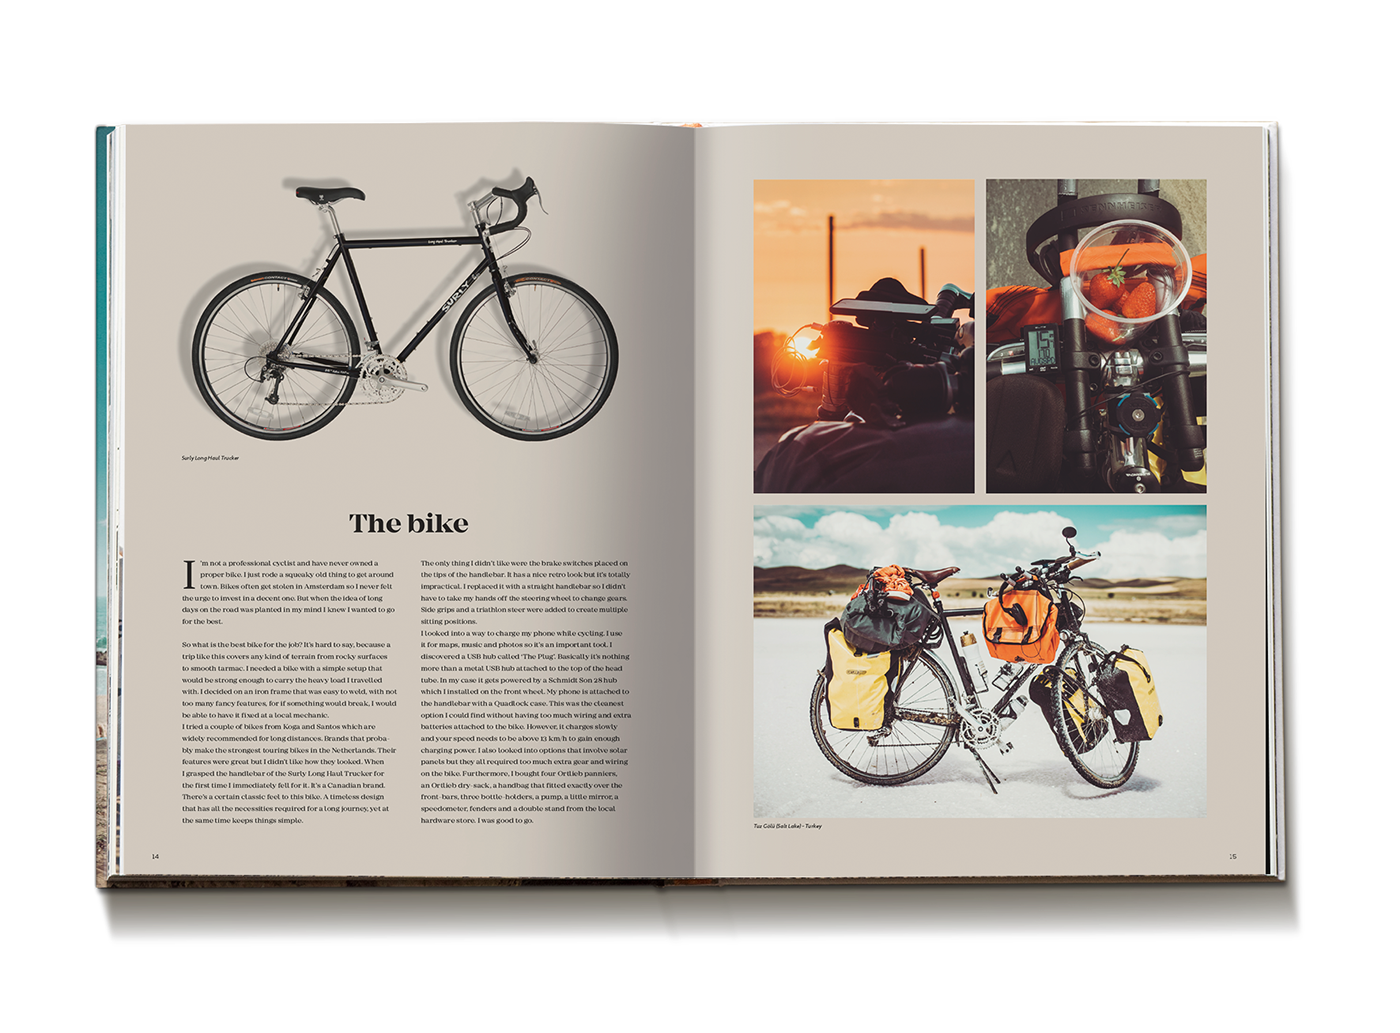 Bicycle Cycling bike touring book Photography  adventure Travel espiritu libre